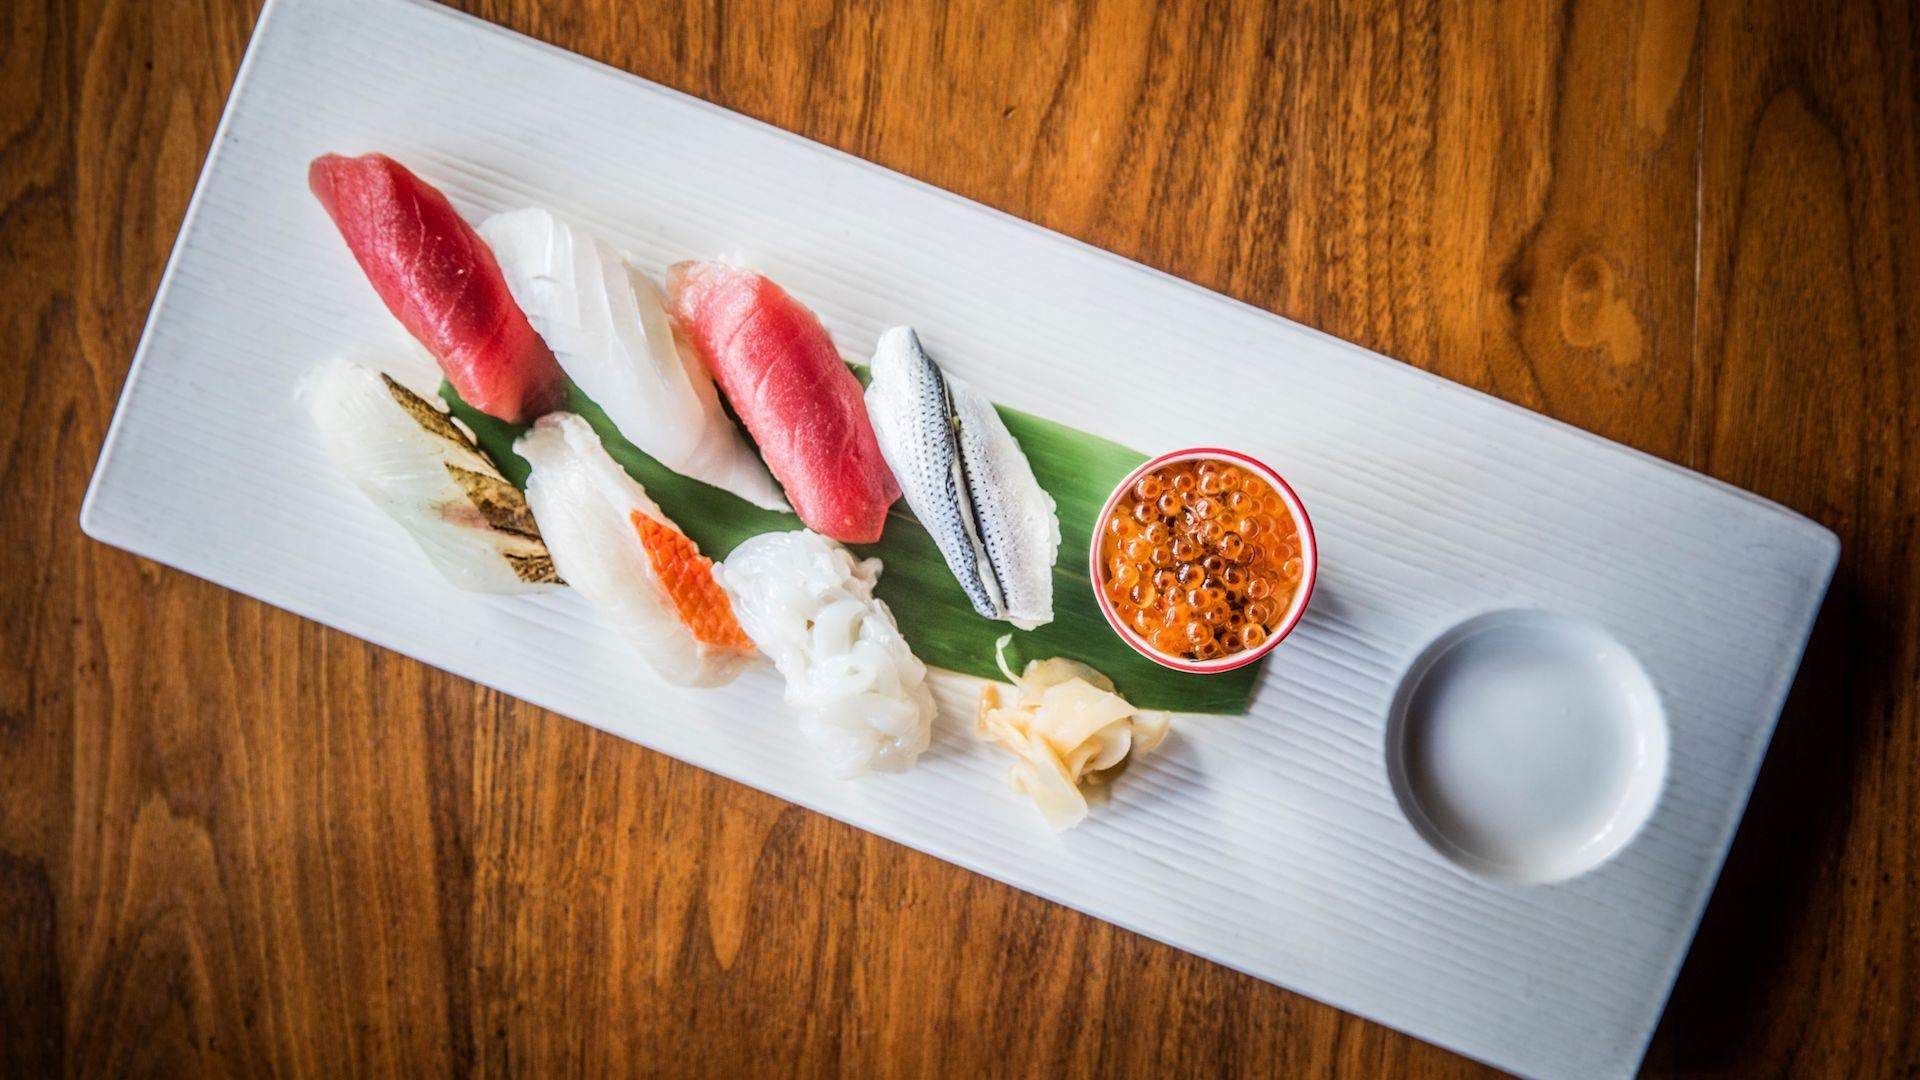 Legendary Japanese Chef Nobuyuki Matsuhisa Is Opening His First Nobu Restaurant in Sydney This Year